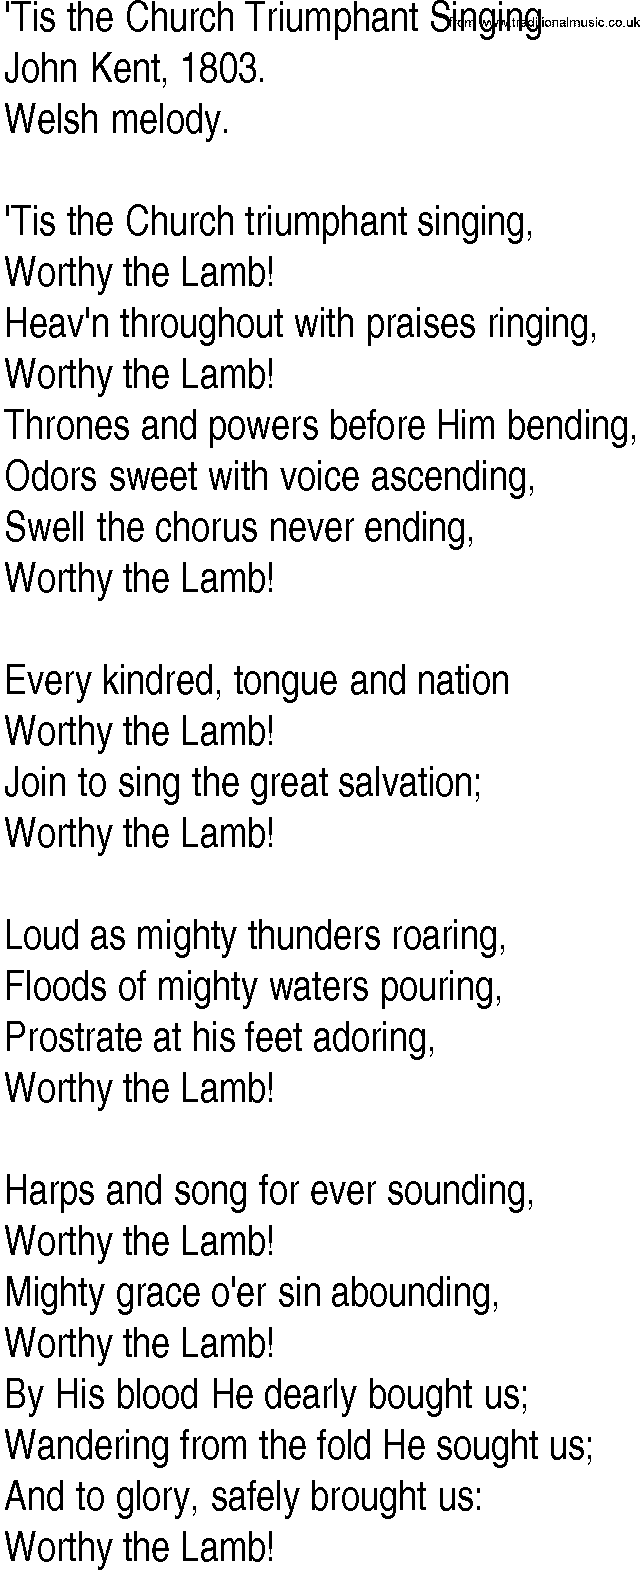 Hymn and Gospel Song: 'Tis the Church Triumphant Singing by John Kent lyrics